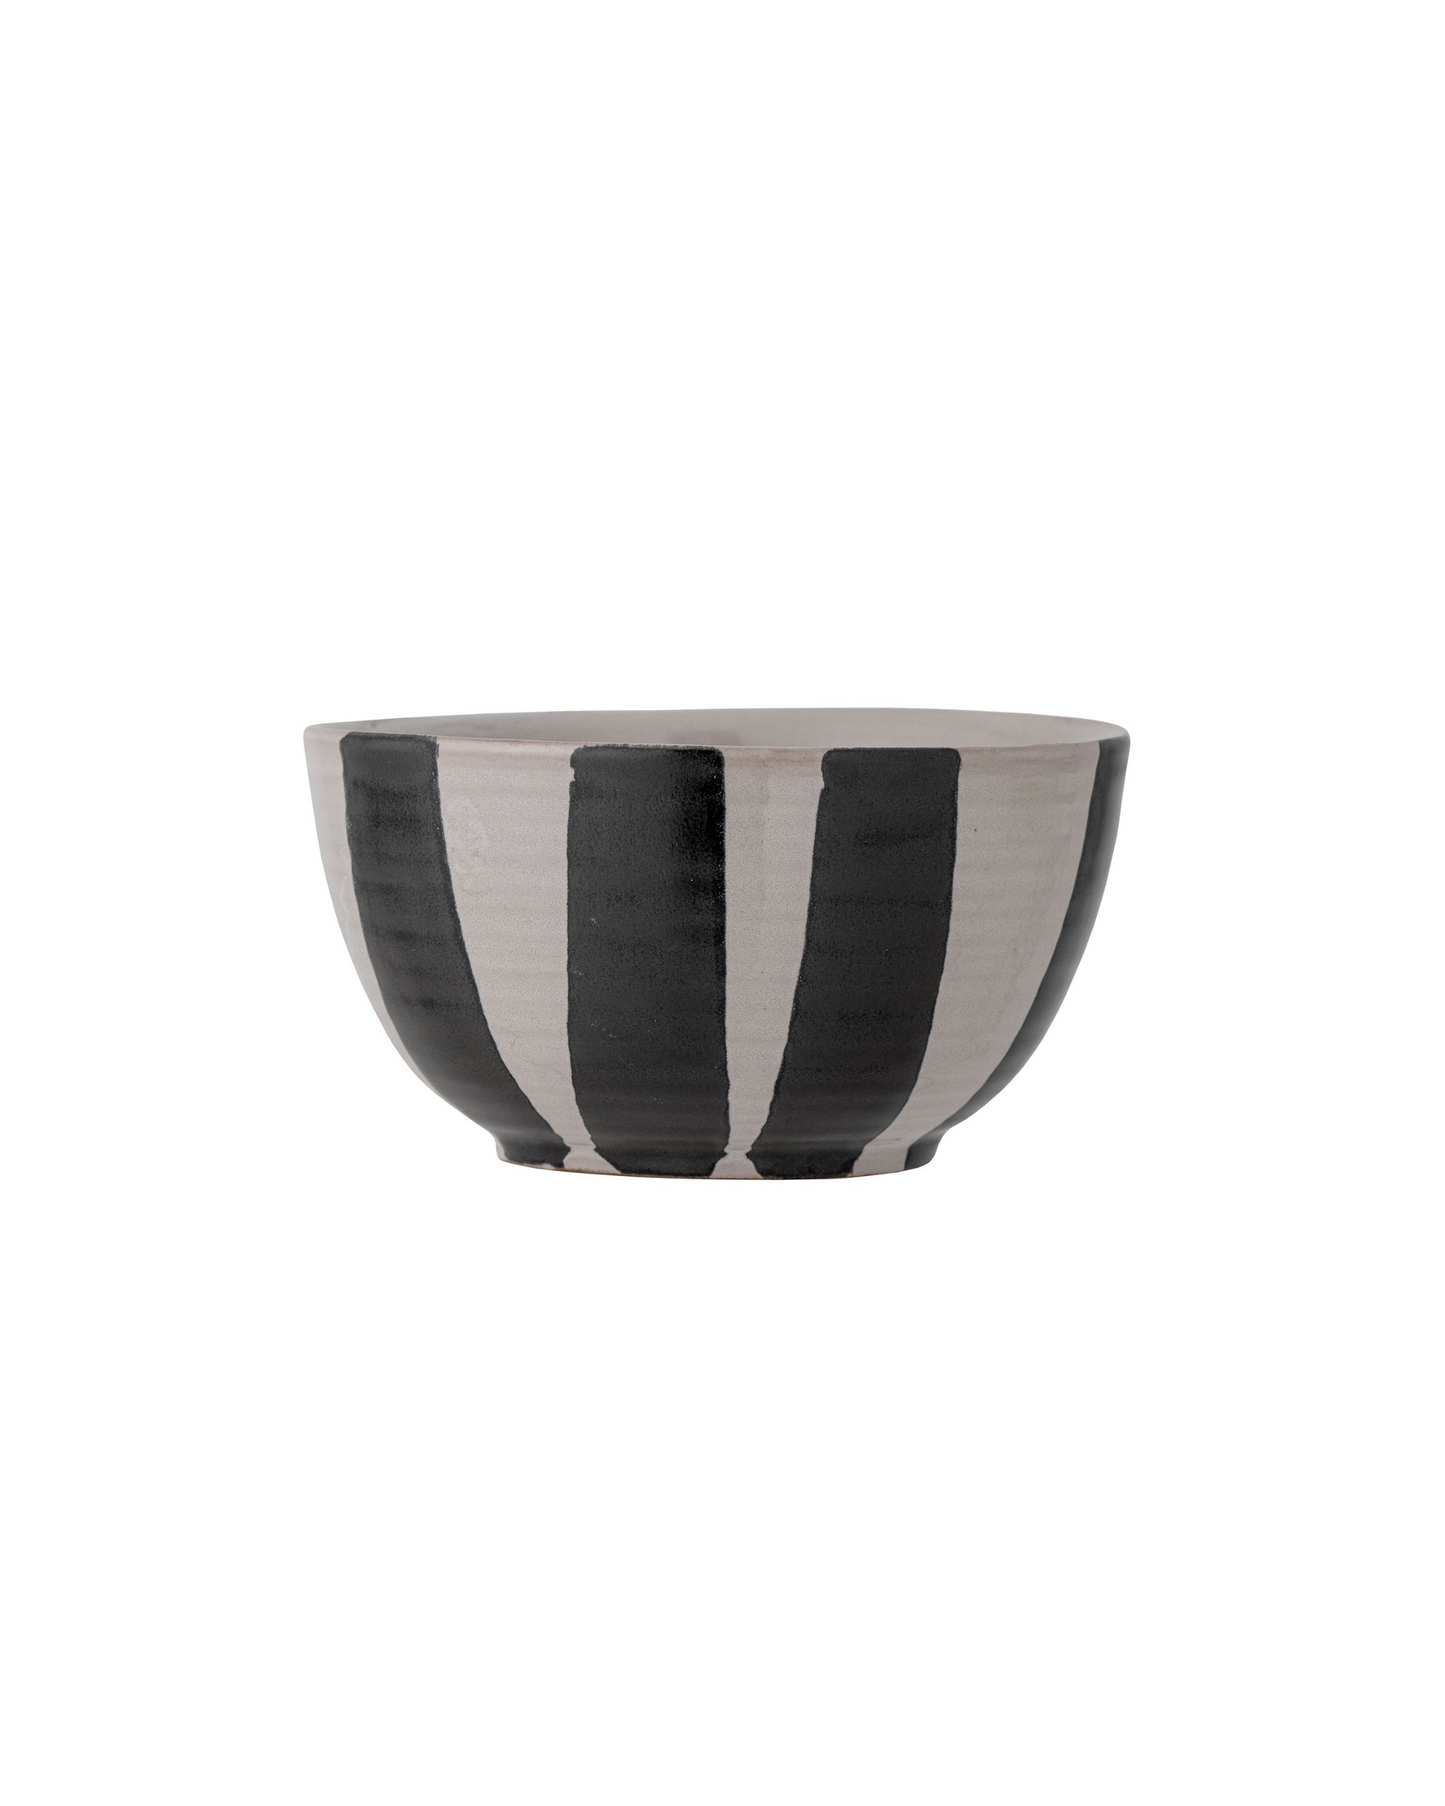 White bowl with large black stripes